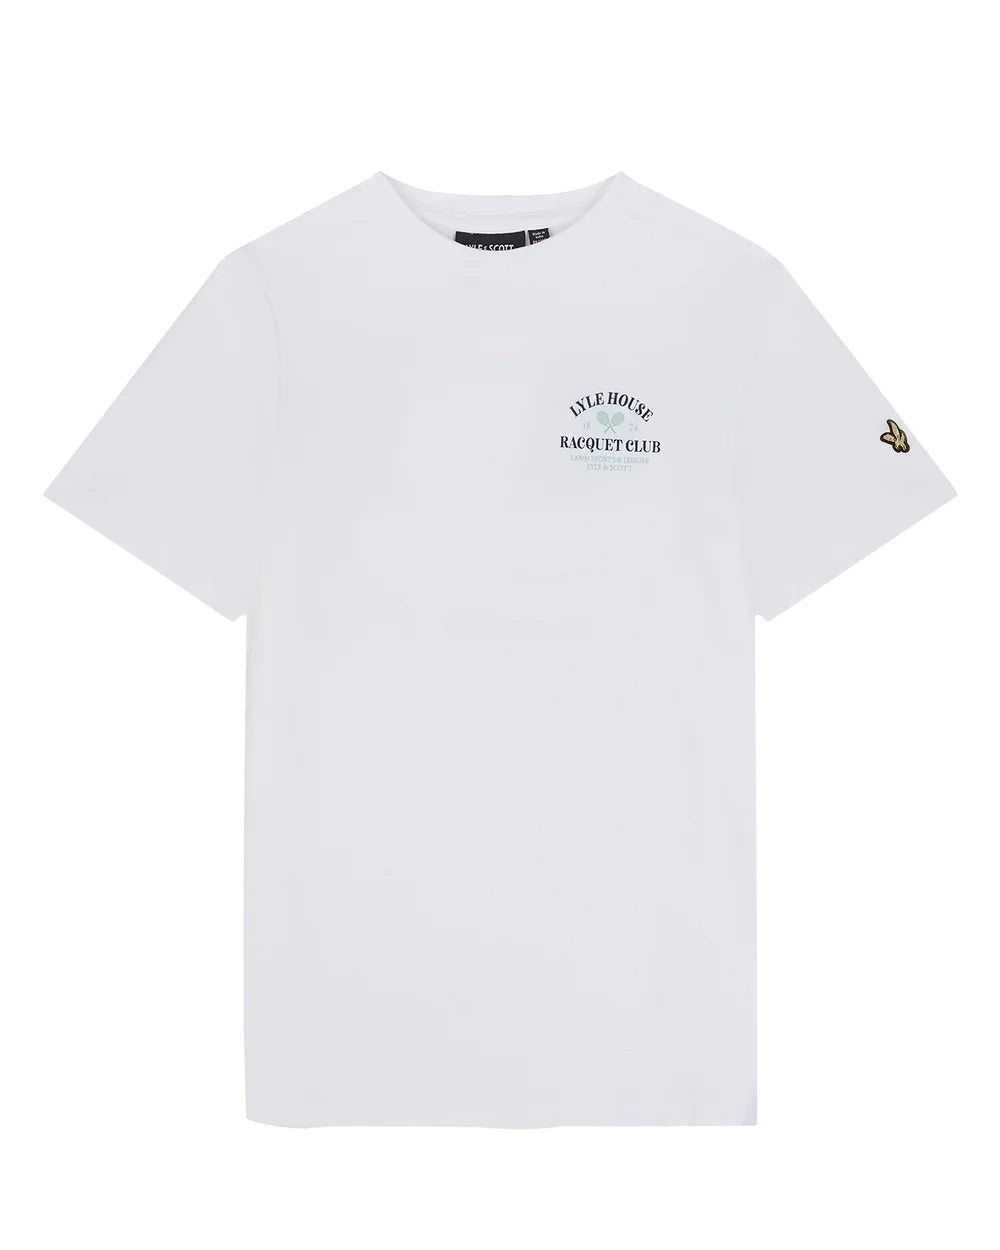 Racquet Club Graphic T-shirt  White